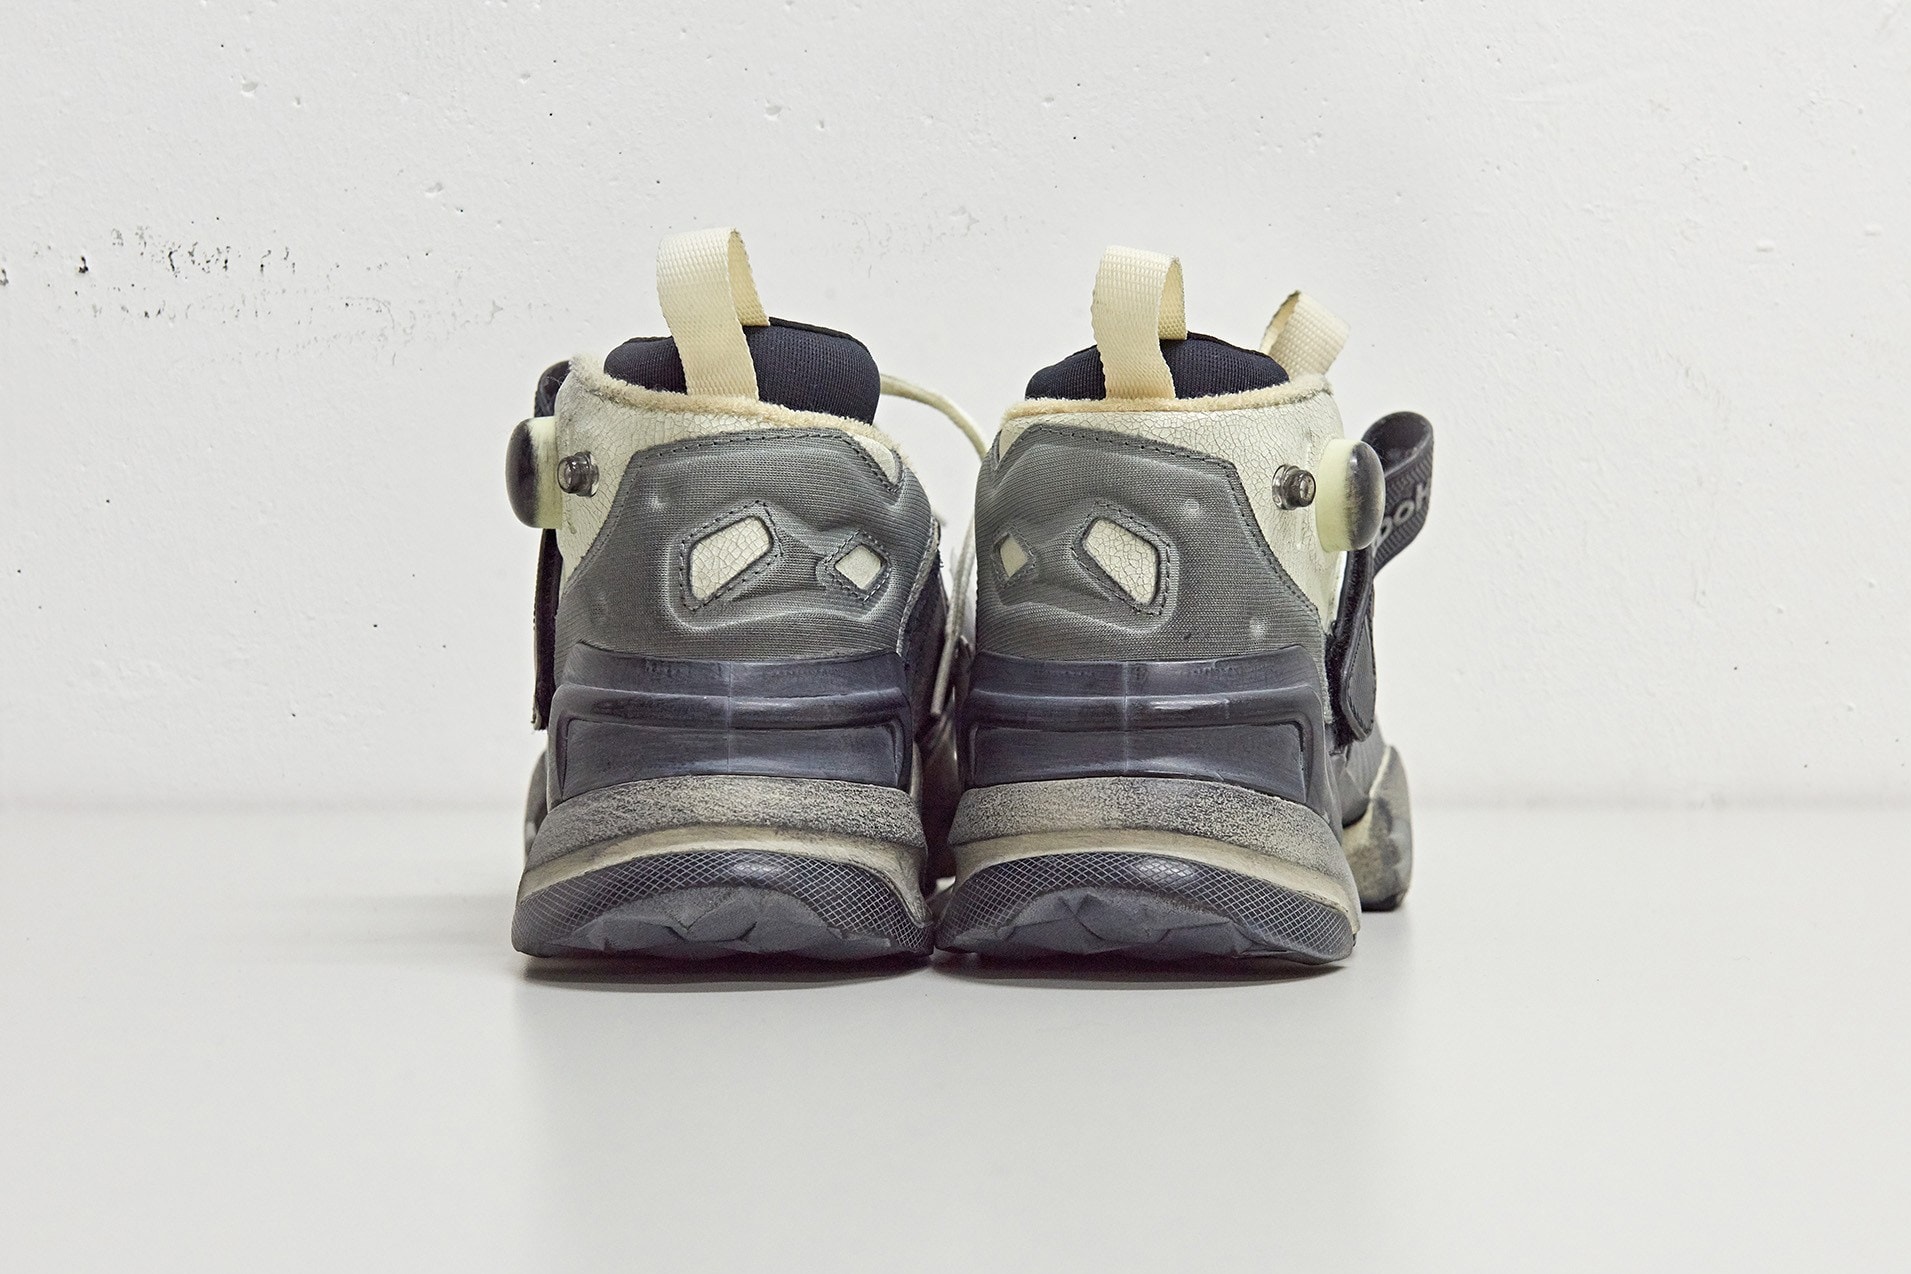 Vetements Reebok Genetically Modified Pump Sneaker 10 Corso Como Seoul Exclusive